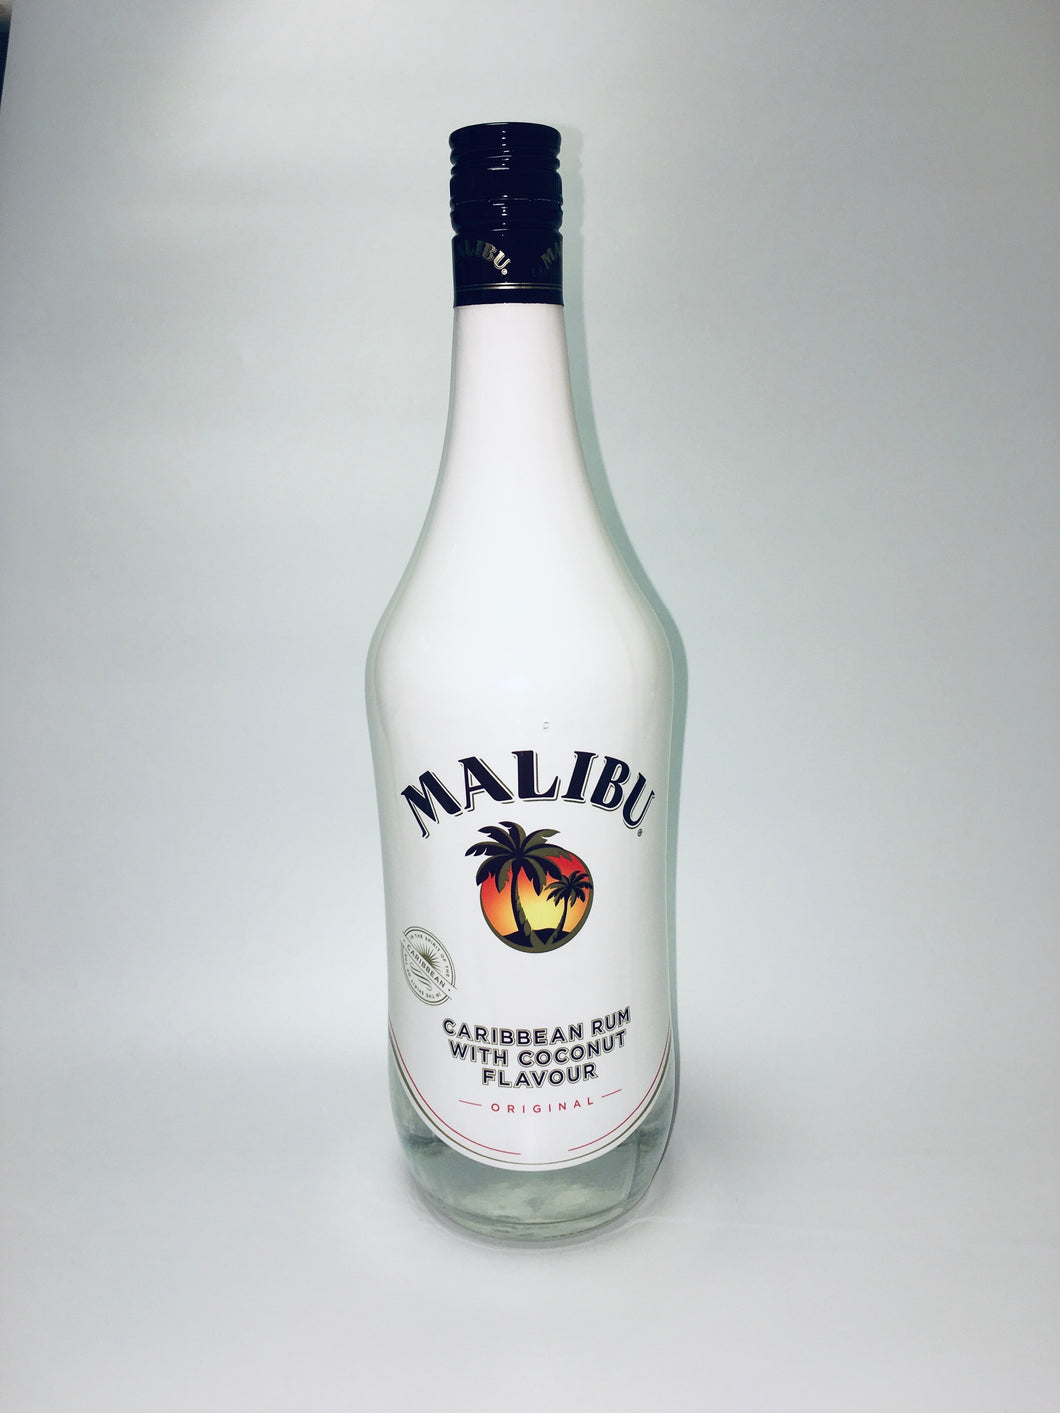 Malibu Caribbean Rum with Coconut Flavour, 1L